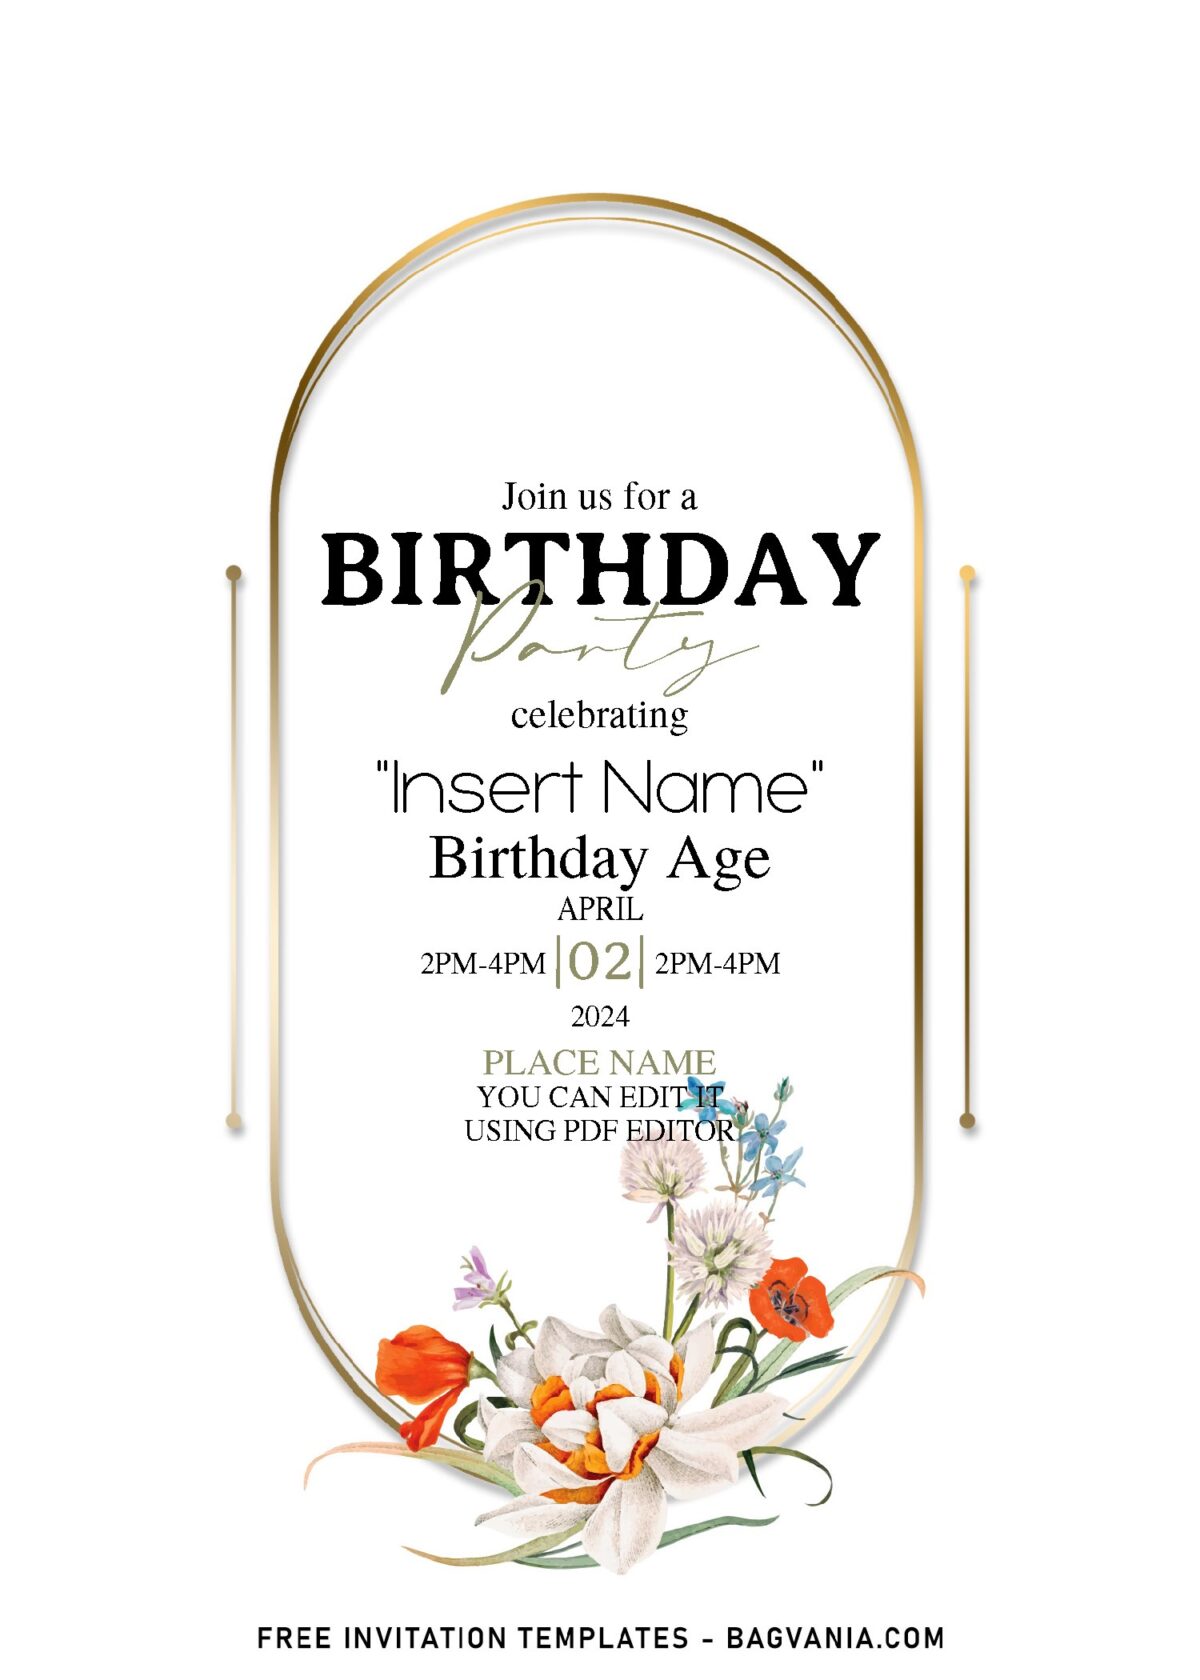 (Free Editable PDF) Whimsical Spring Birthday Invitation Templates